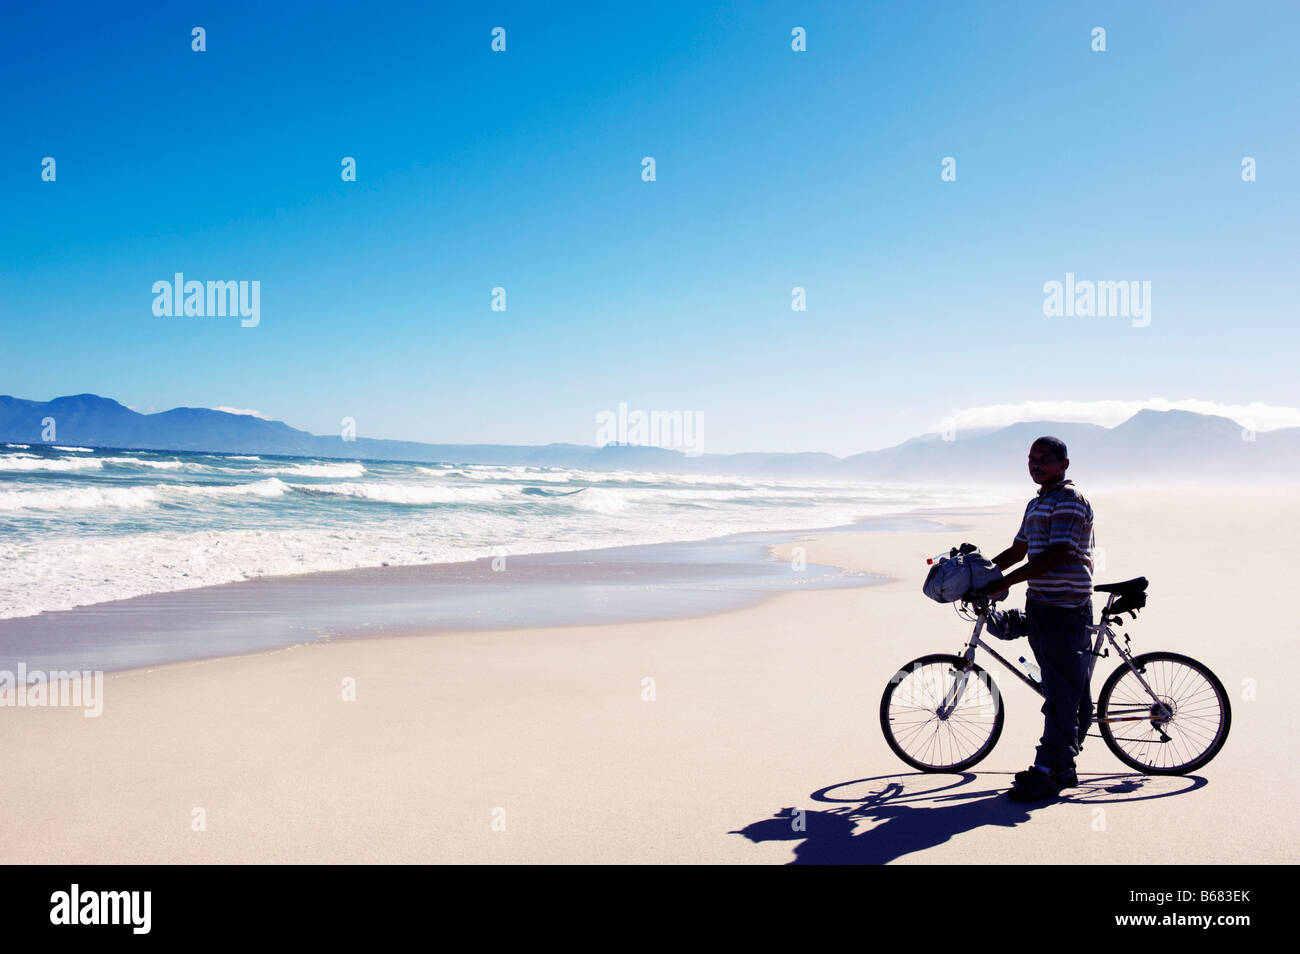 Black man with bike standing on beach Stock Photo